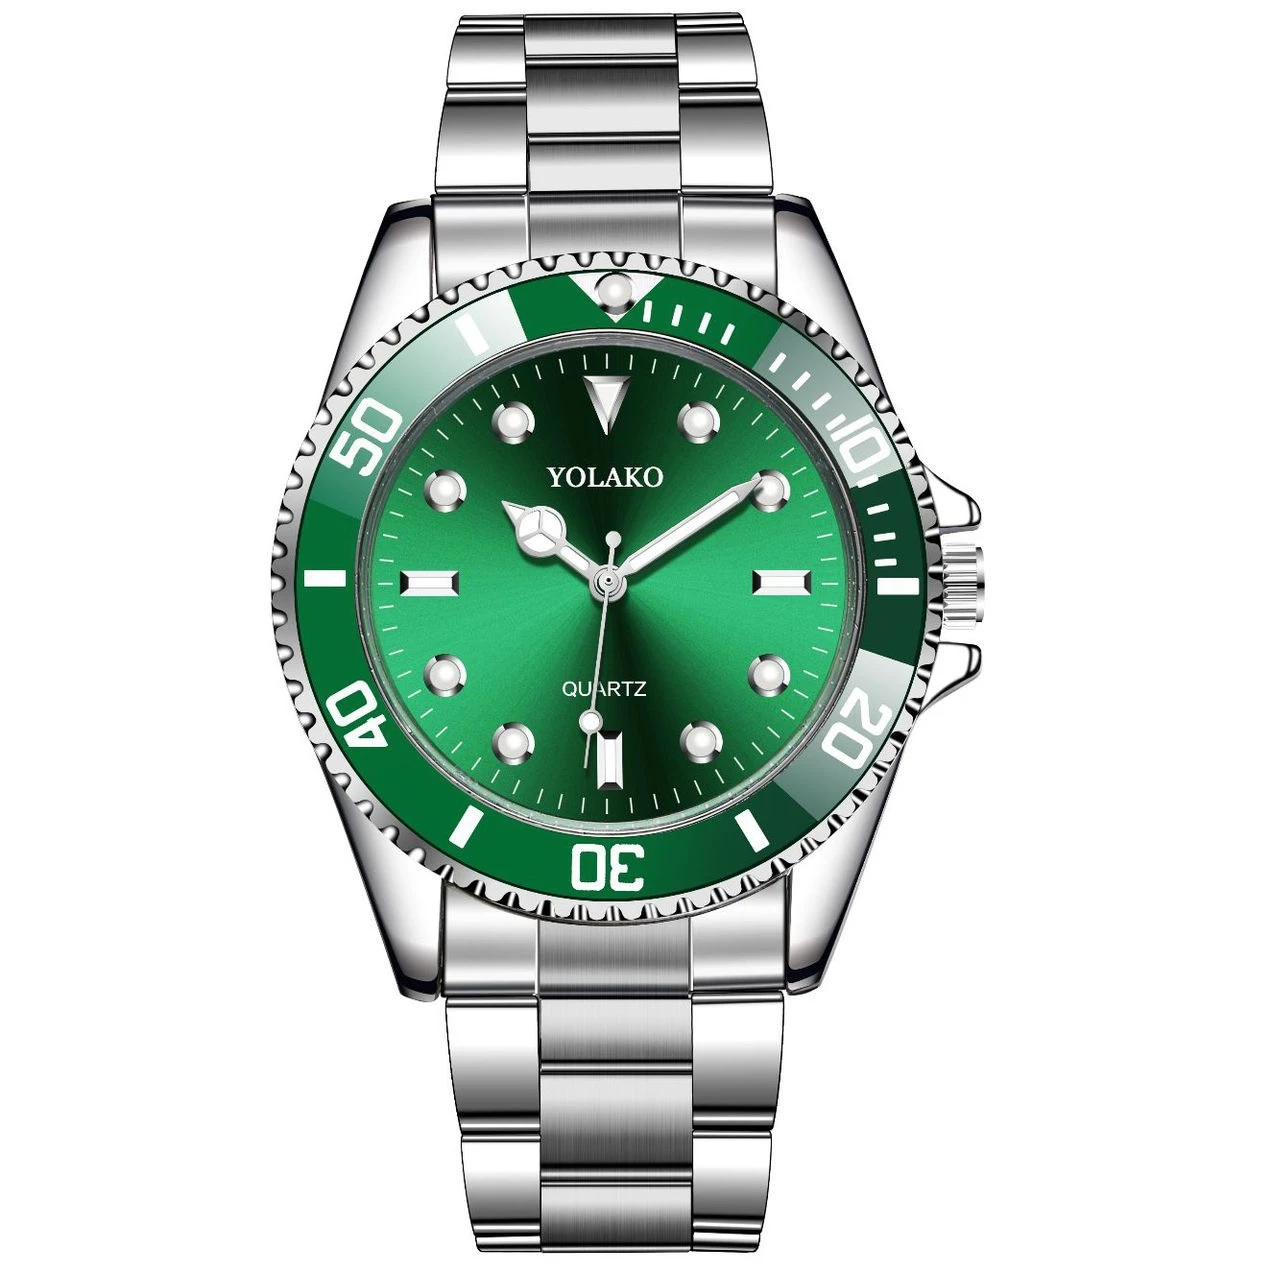 

Amazon selling new business leisure men steel belt watch fashion green water ghost quartz watch manufacturers reloj, 4 colors